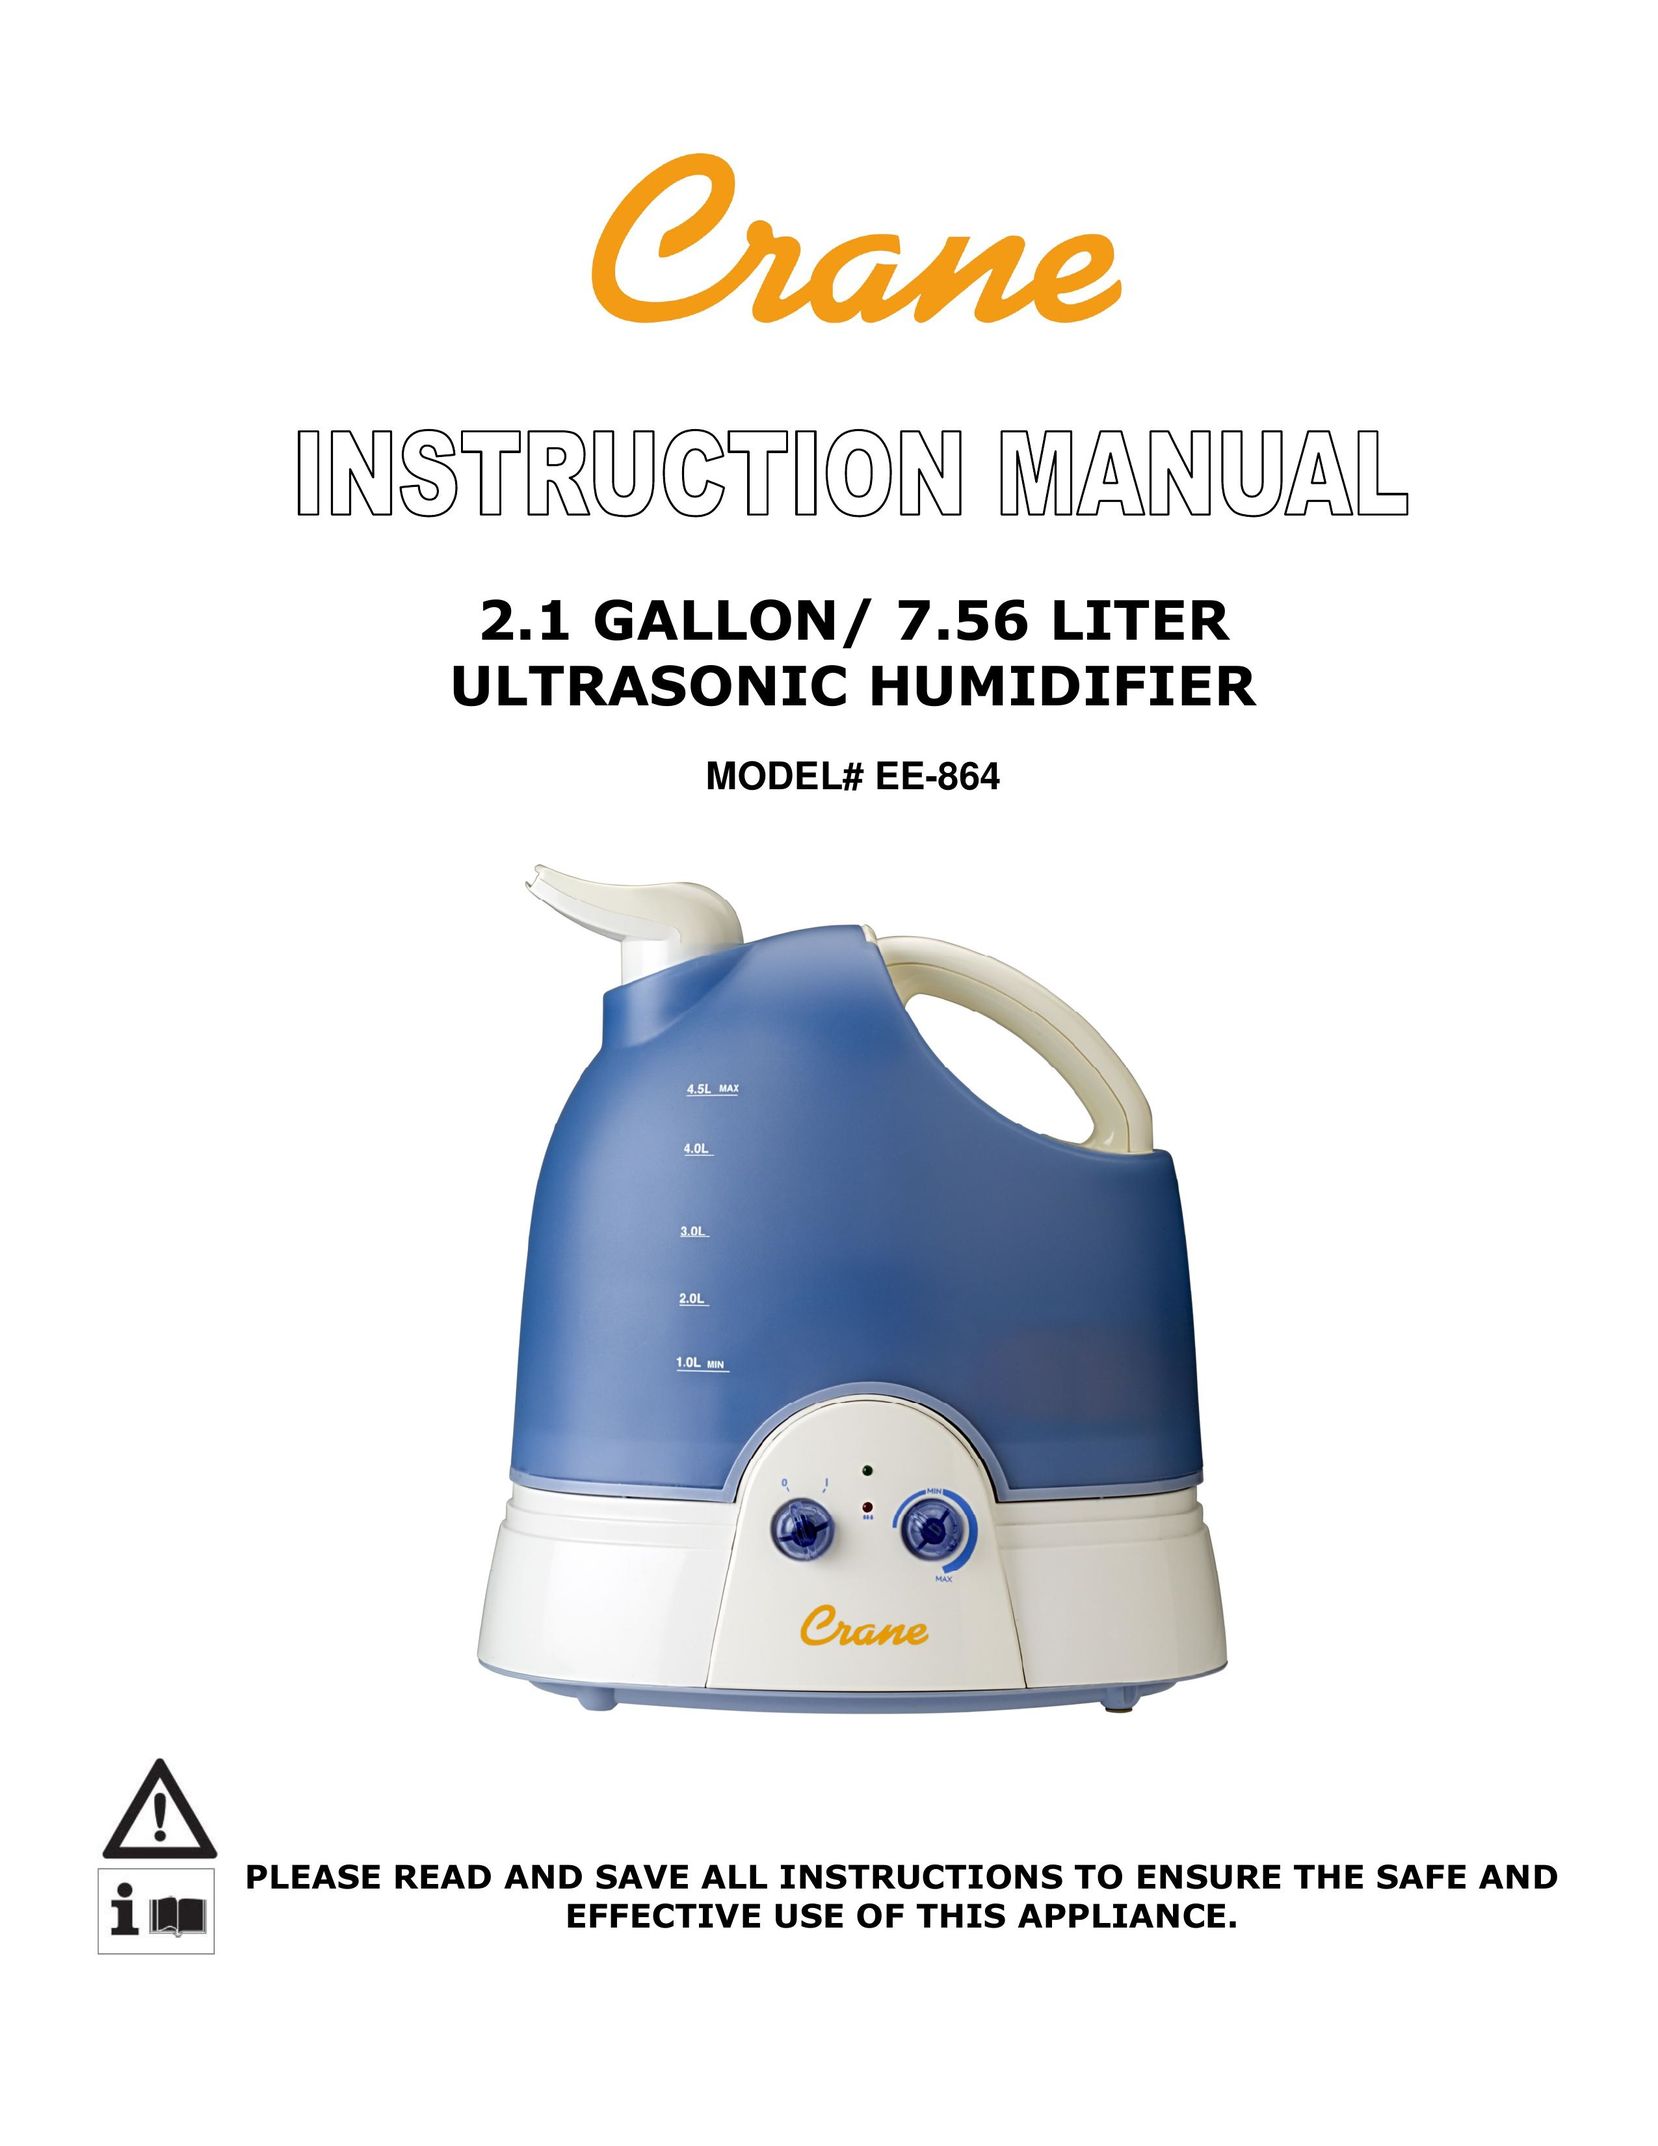 C. Crane EE-864 Humidifier User Manual